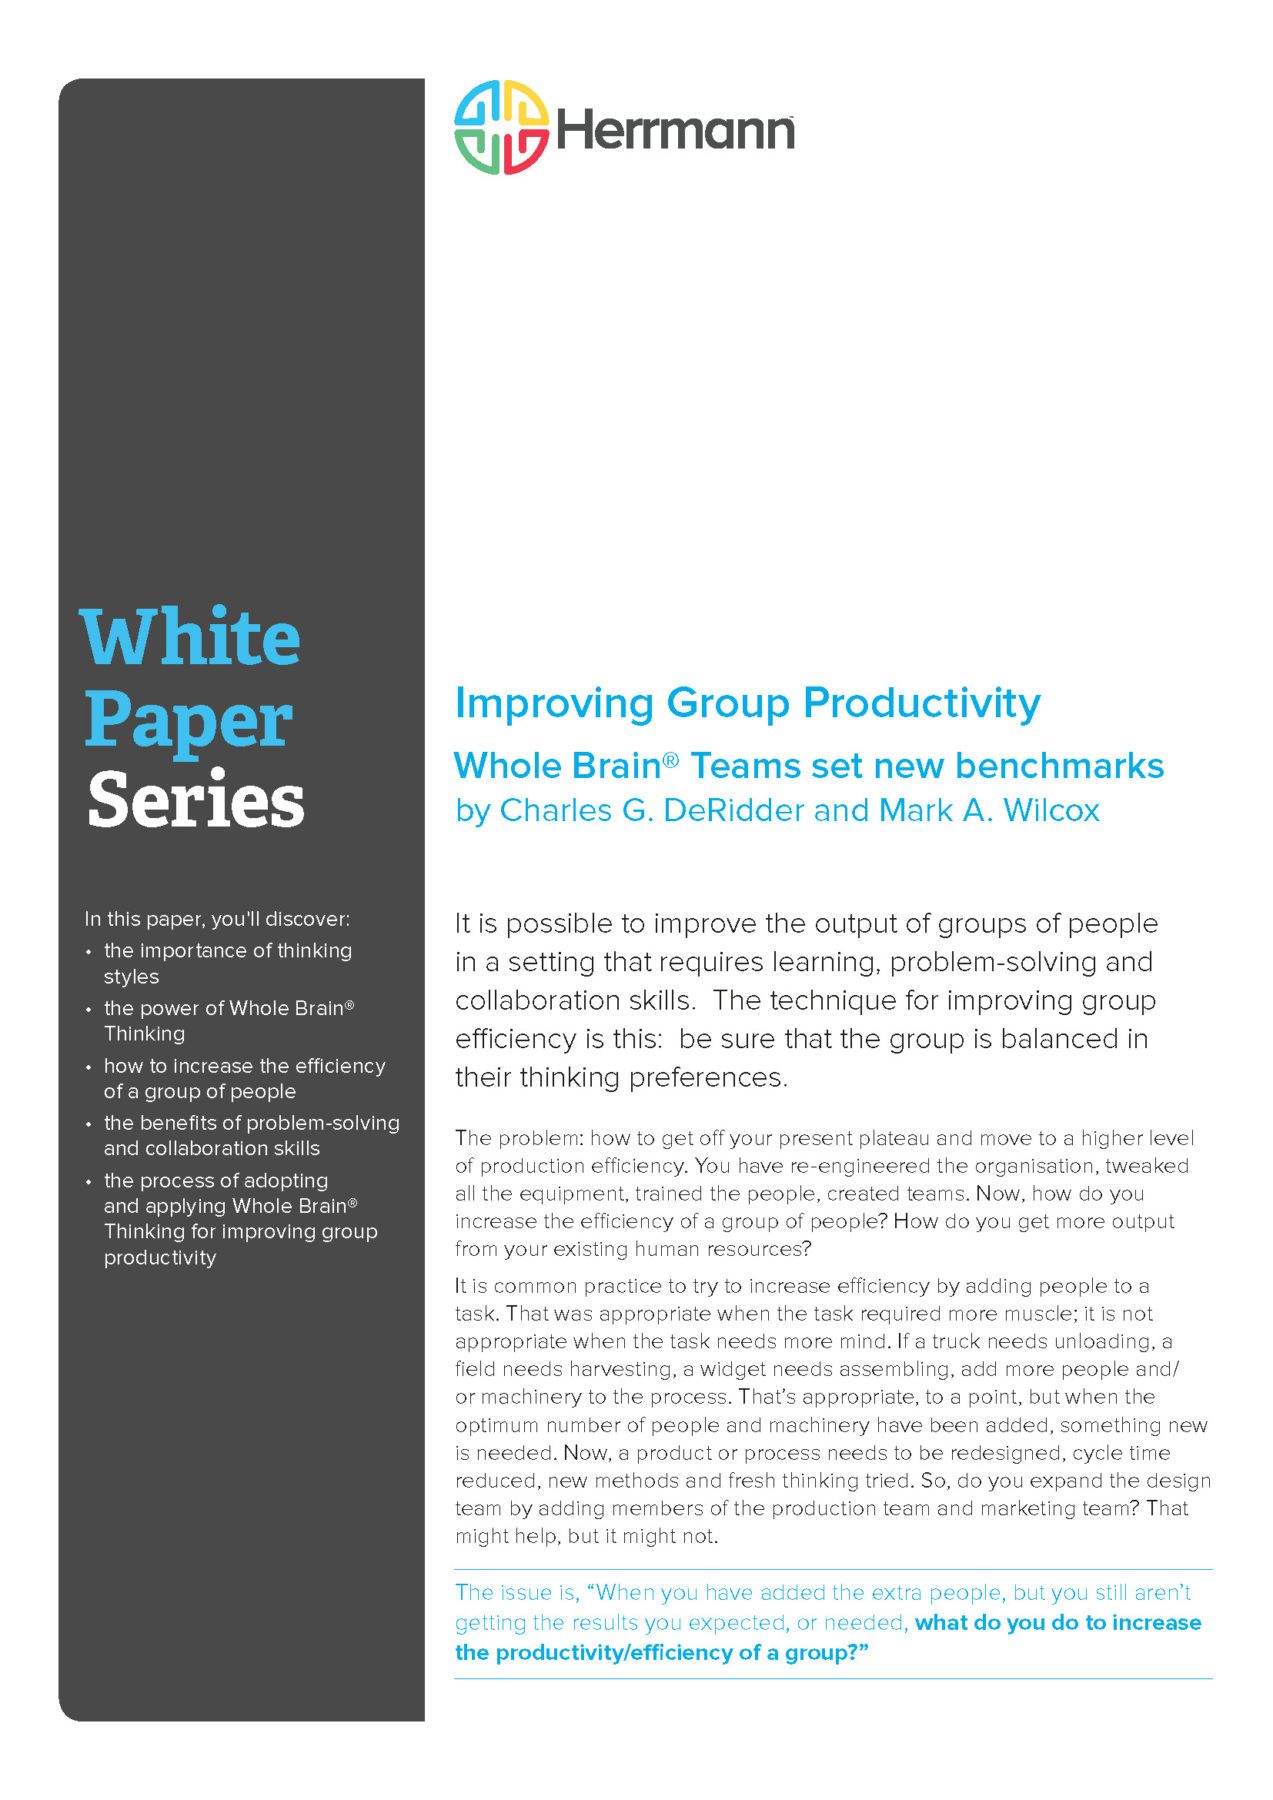 Whitepaper - Improving Group Productivity